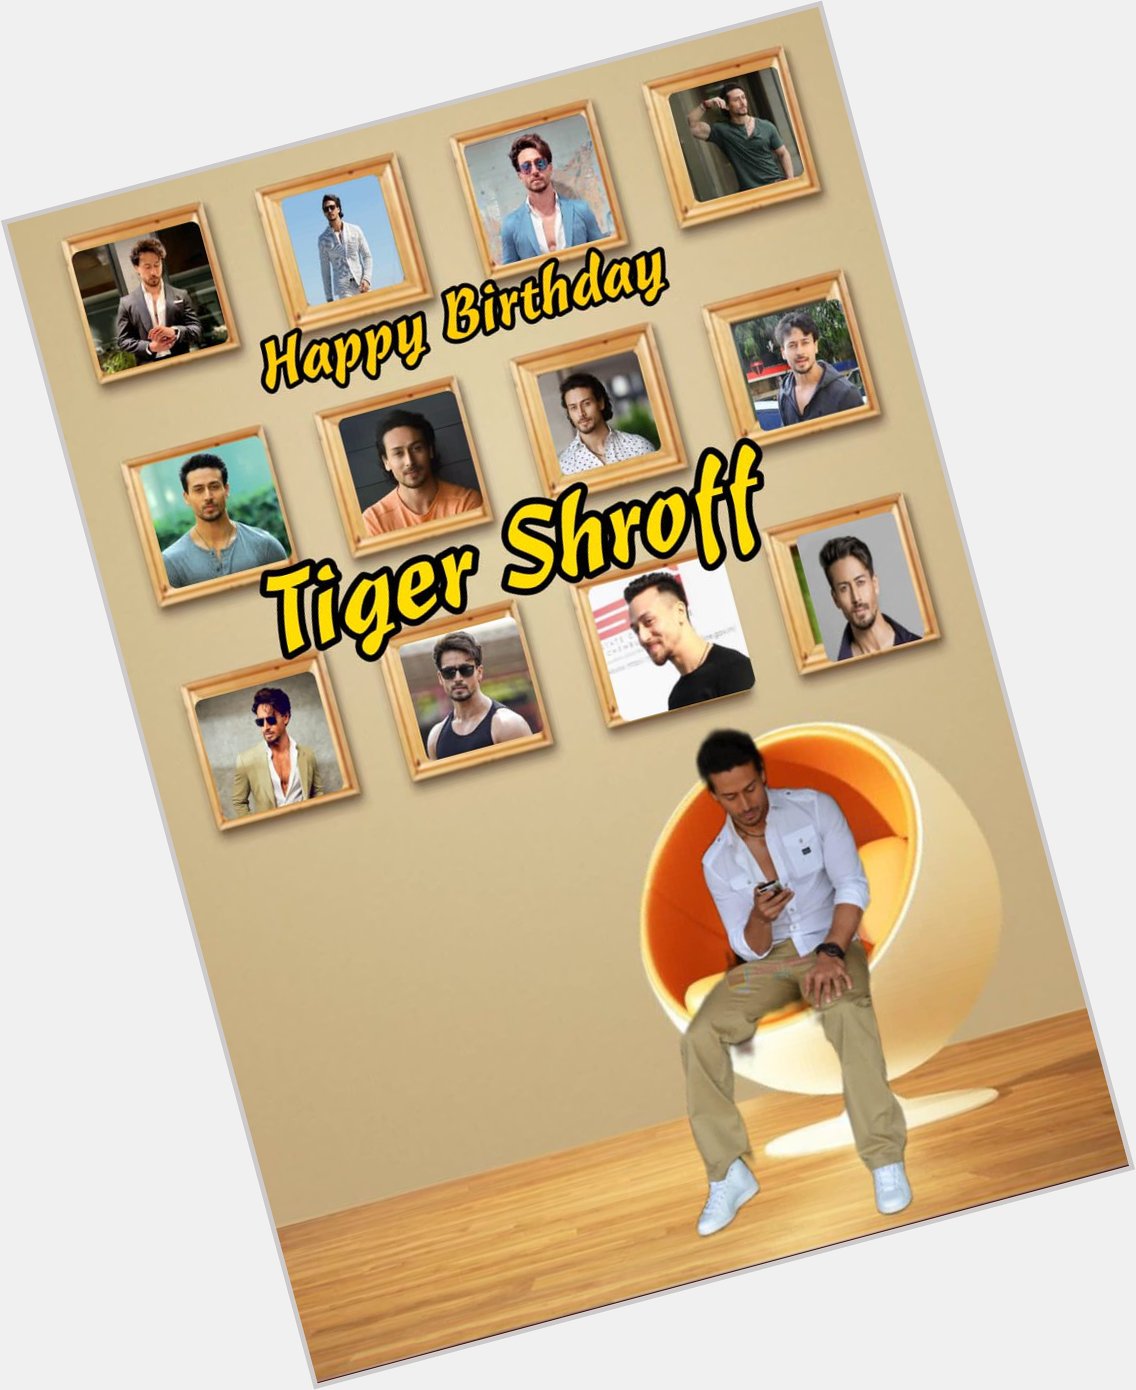 Happy Birthday Tiger Shroff   